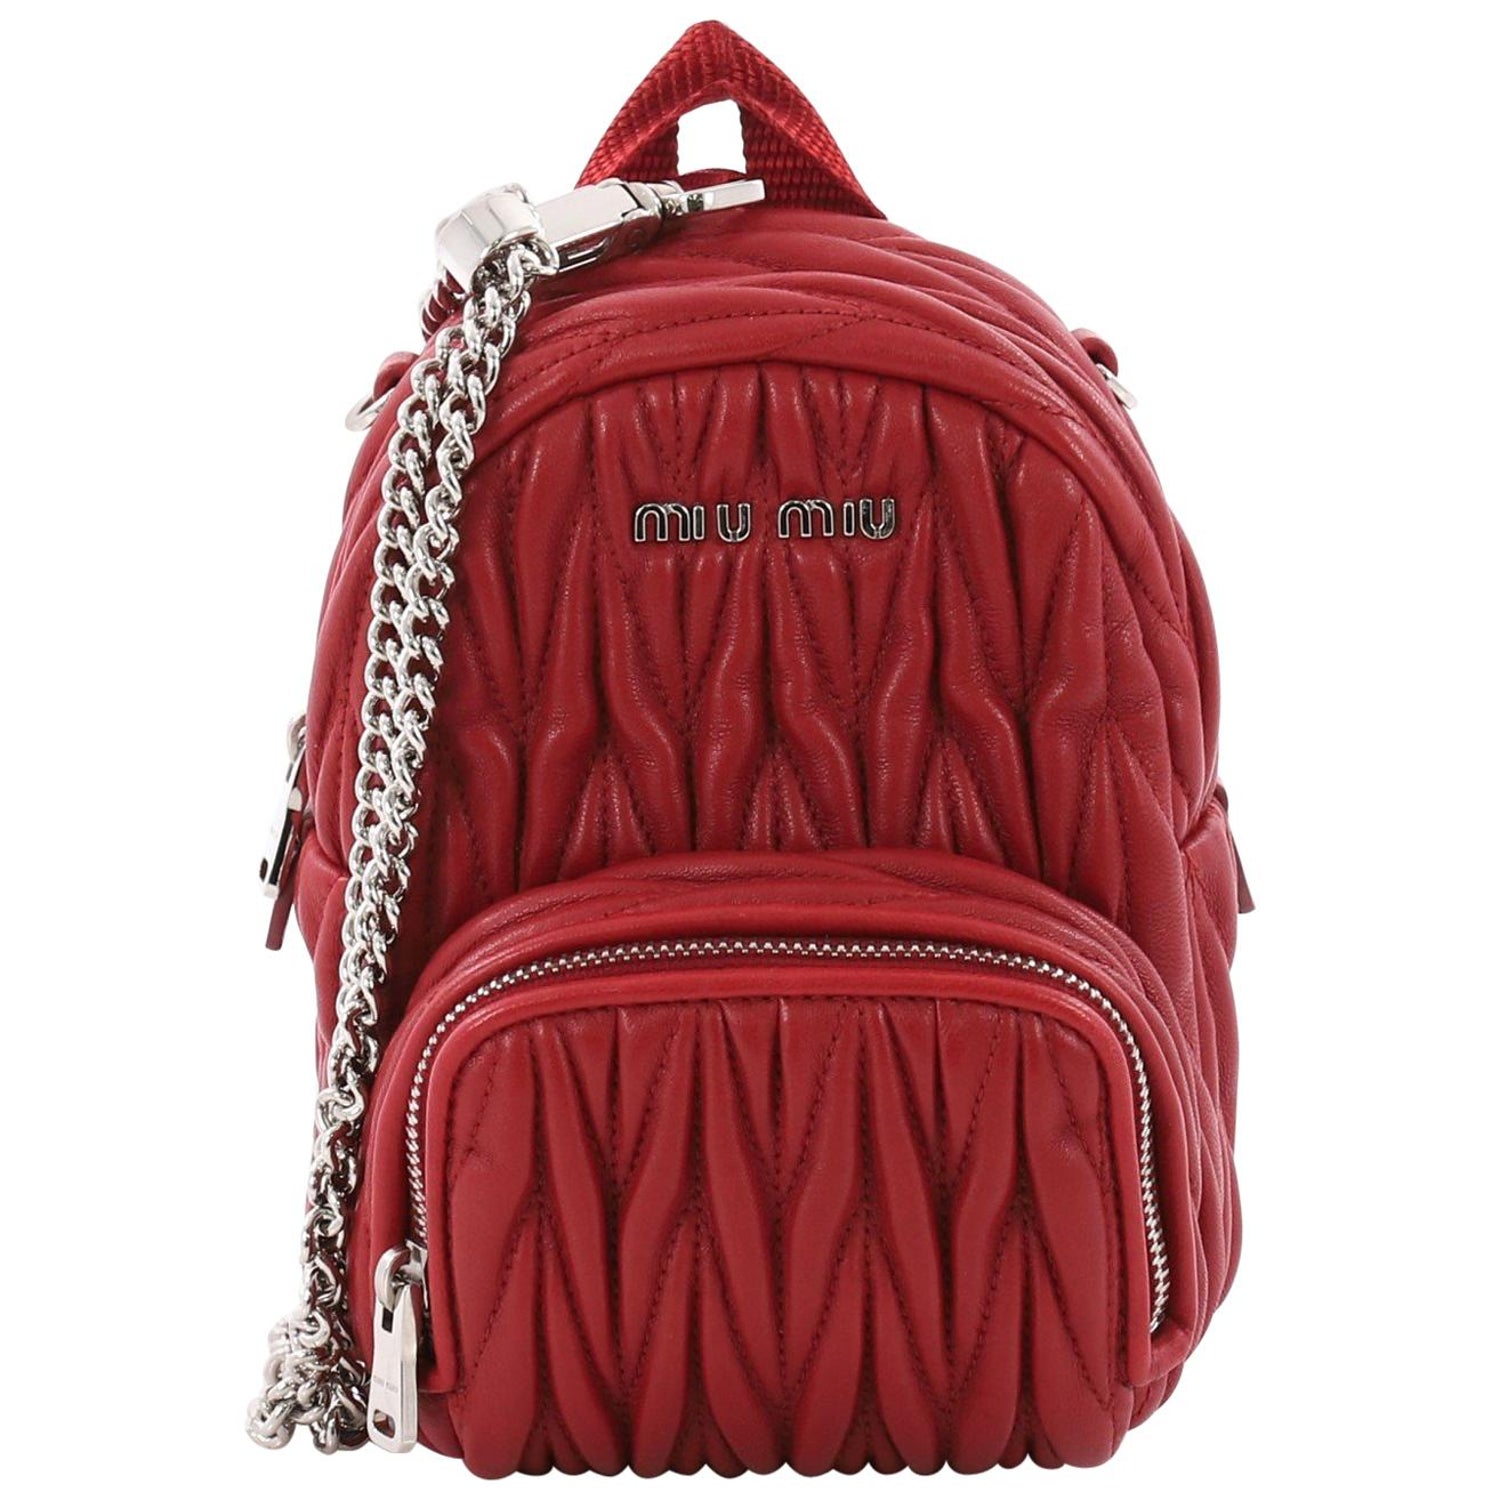 Miu Miu Handbag - 119 For Sale on 1stDibs  miu miu backpack, miu miu red  bag, miu miu bag